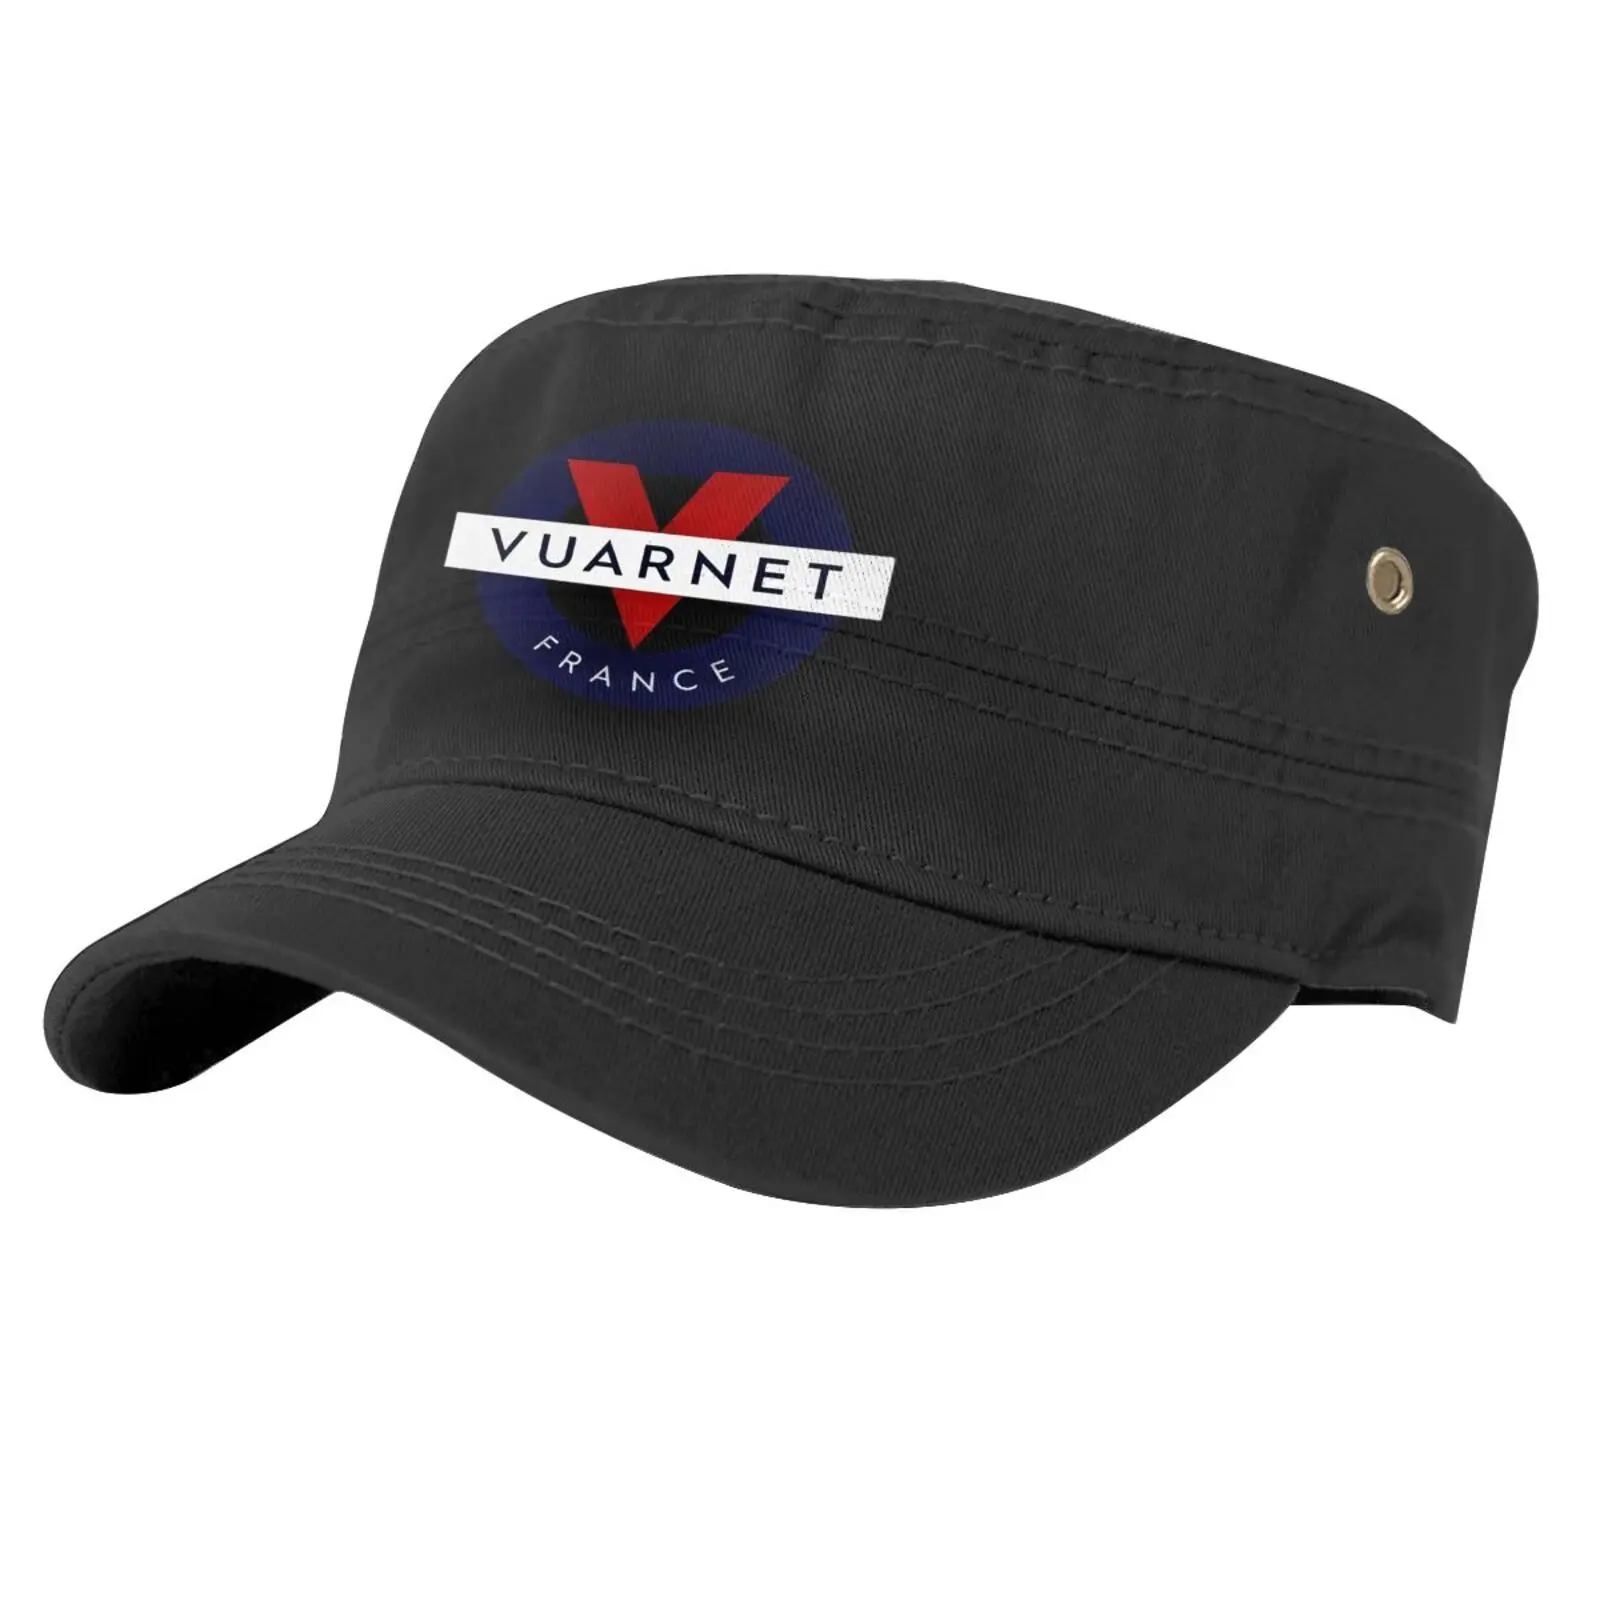 

Vuarnet Iconic Reprint Caps For Men Cap Male Men's Panama Hat Summer Hat Summer Bucket Hat Cap For Men Cowgirl Beach Men's Hat